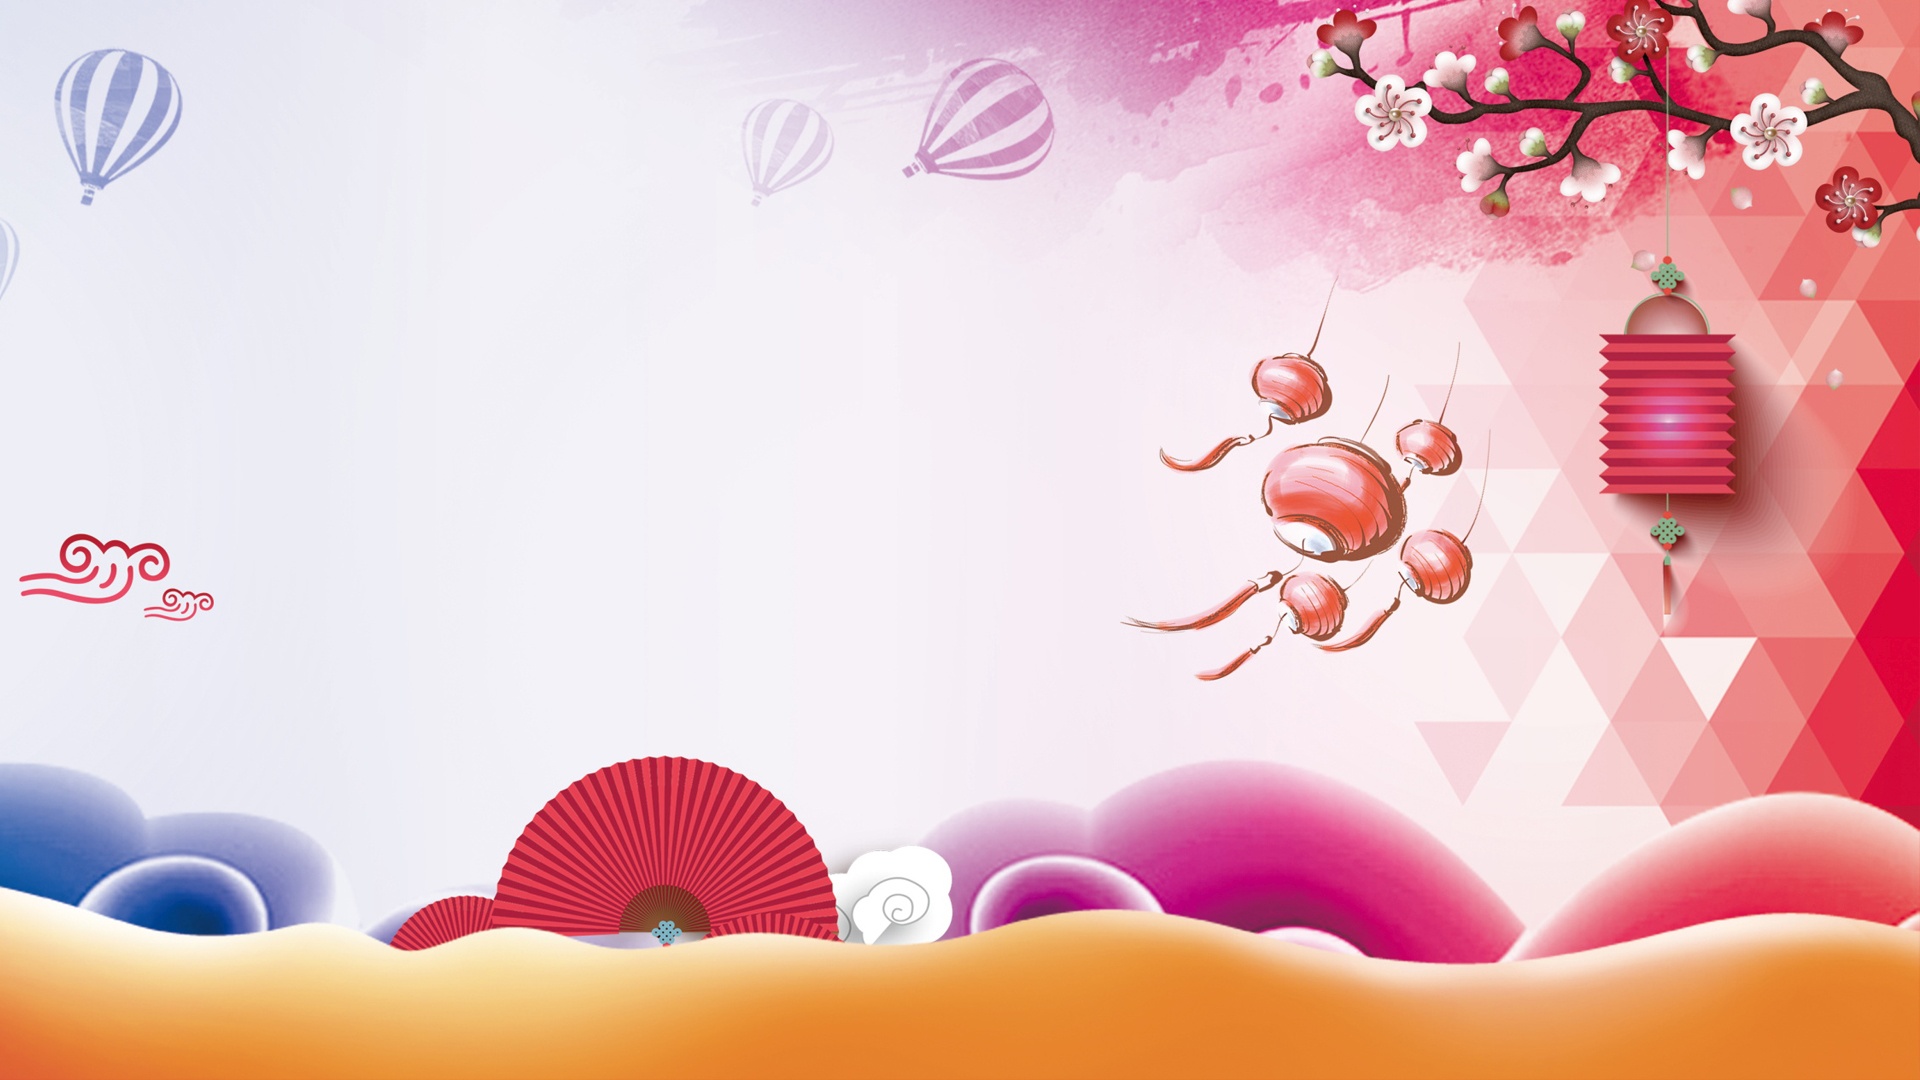 Chinese New Year Minimalist desktop wallpaper free download